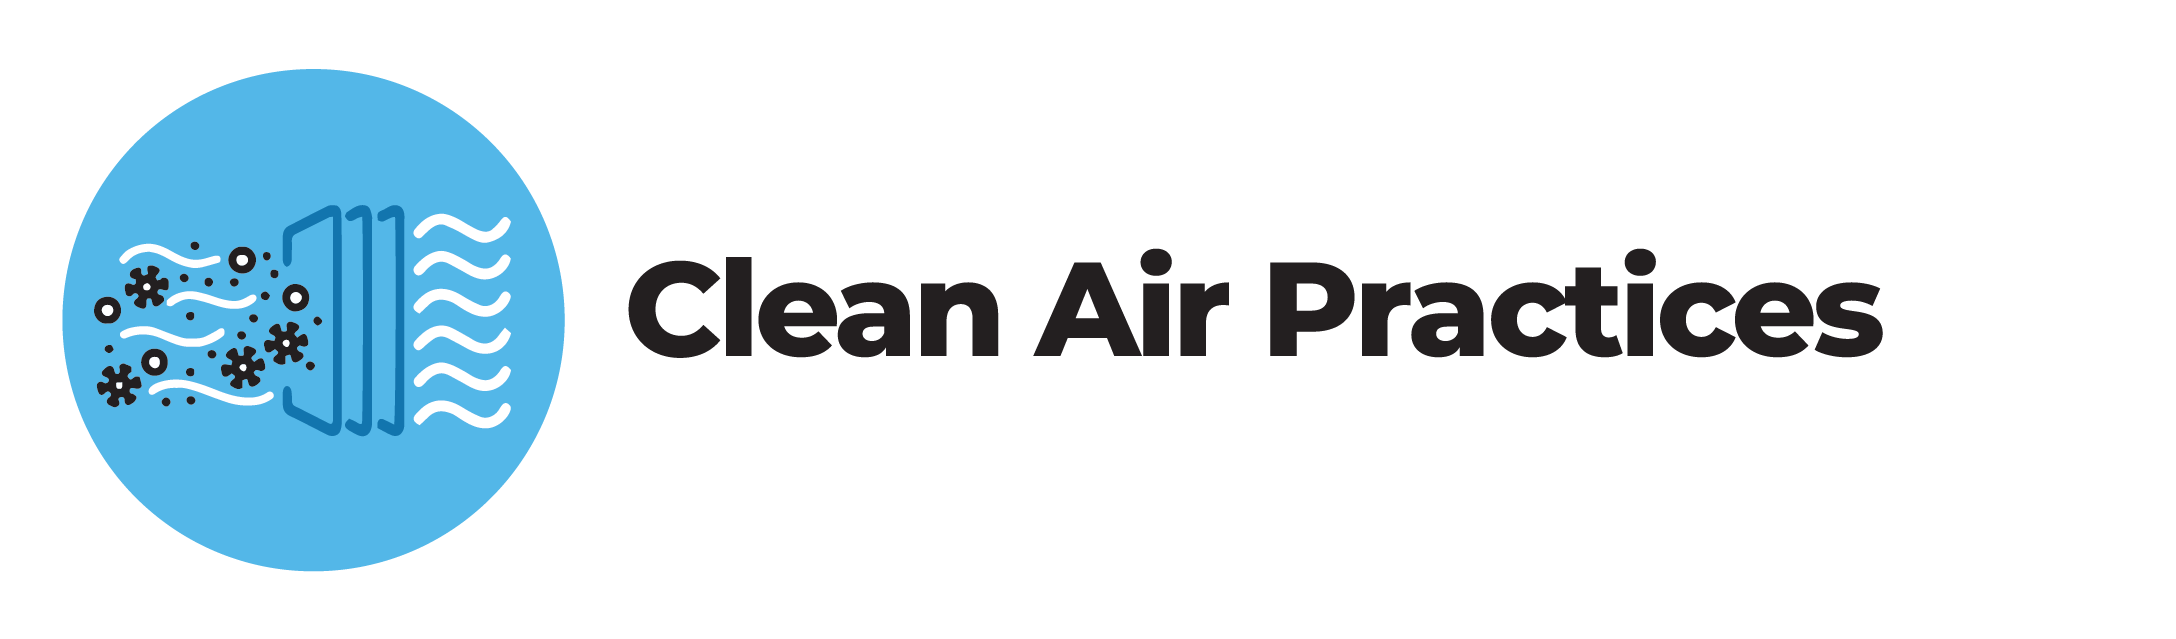 Clean Air graphic representation